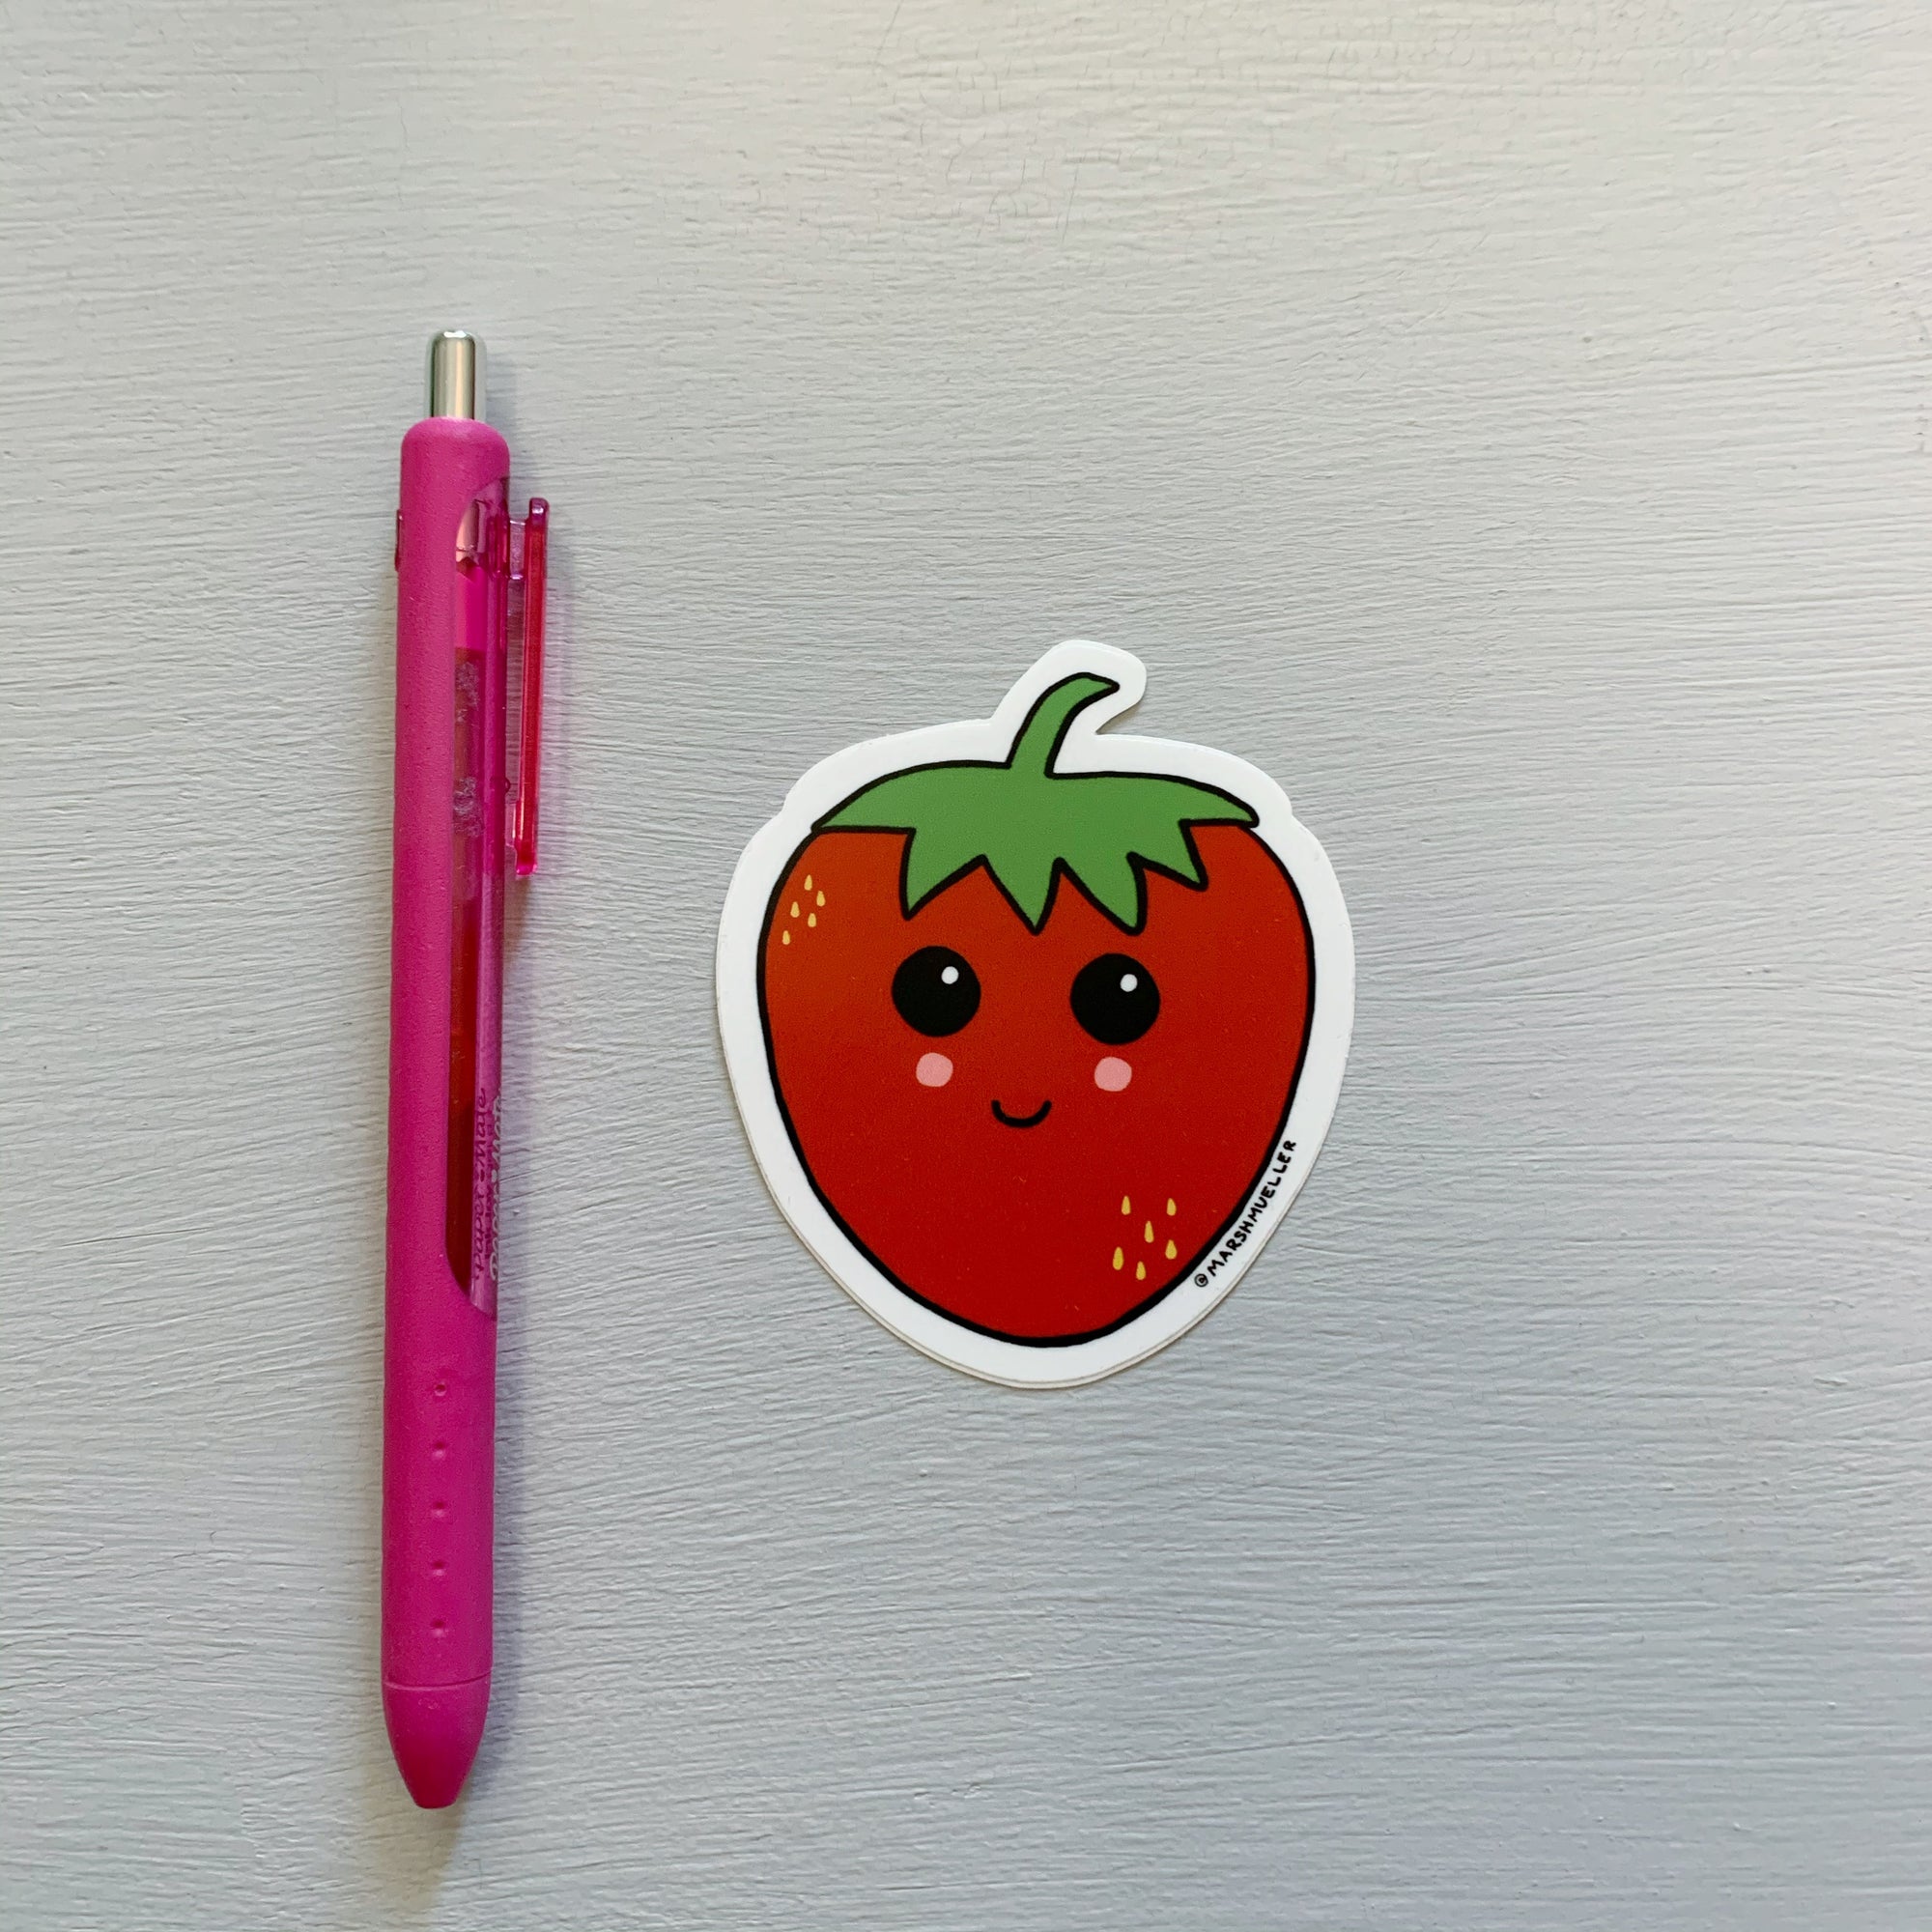 Cute pink strawberry - Strawberry - Sticker